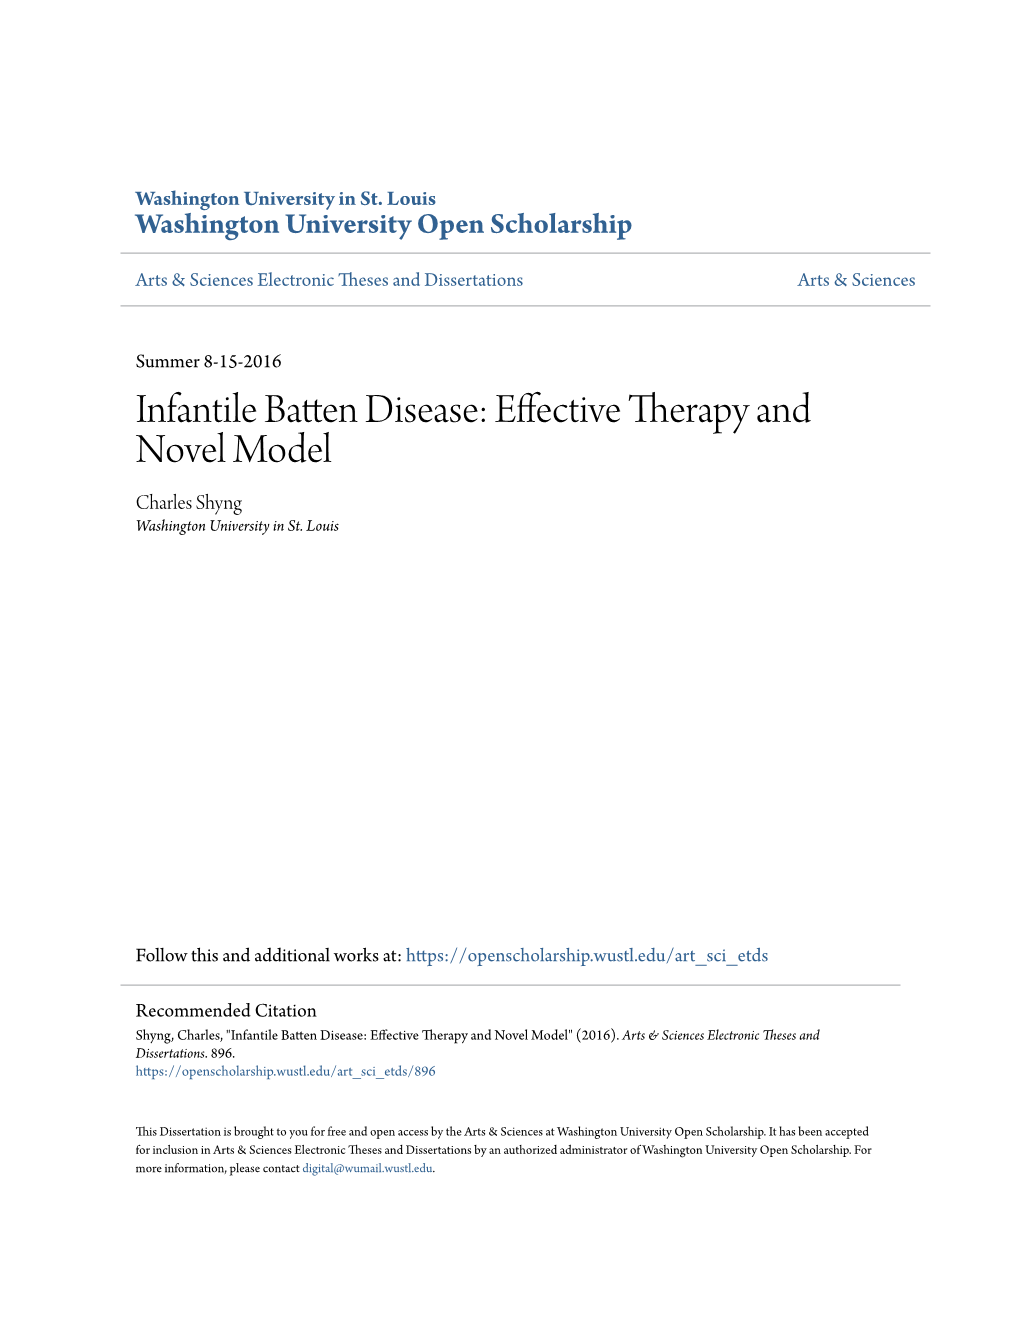 Infantile Batten Disease: Effective Therapy and Novel Model Charles Shyng Washington University in St